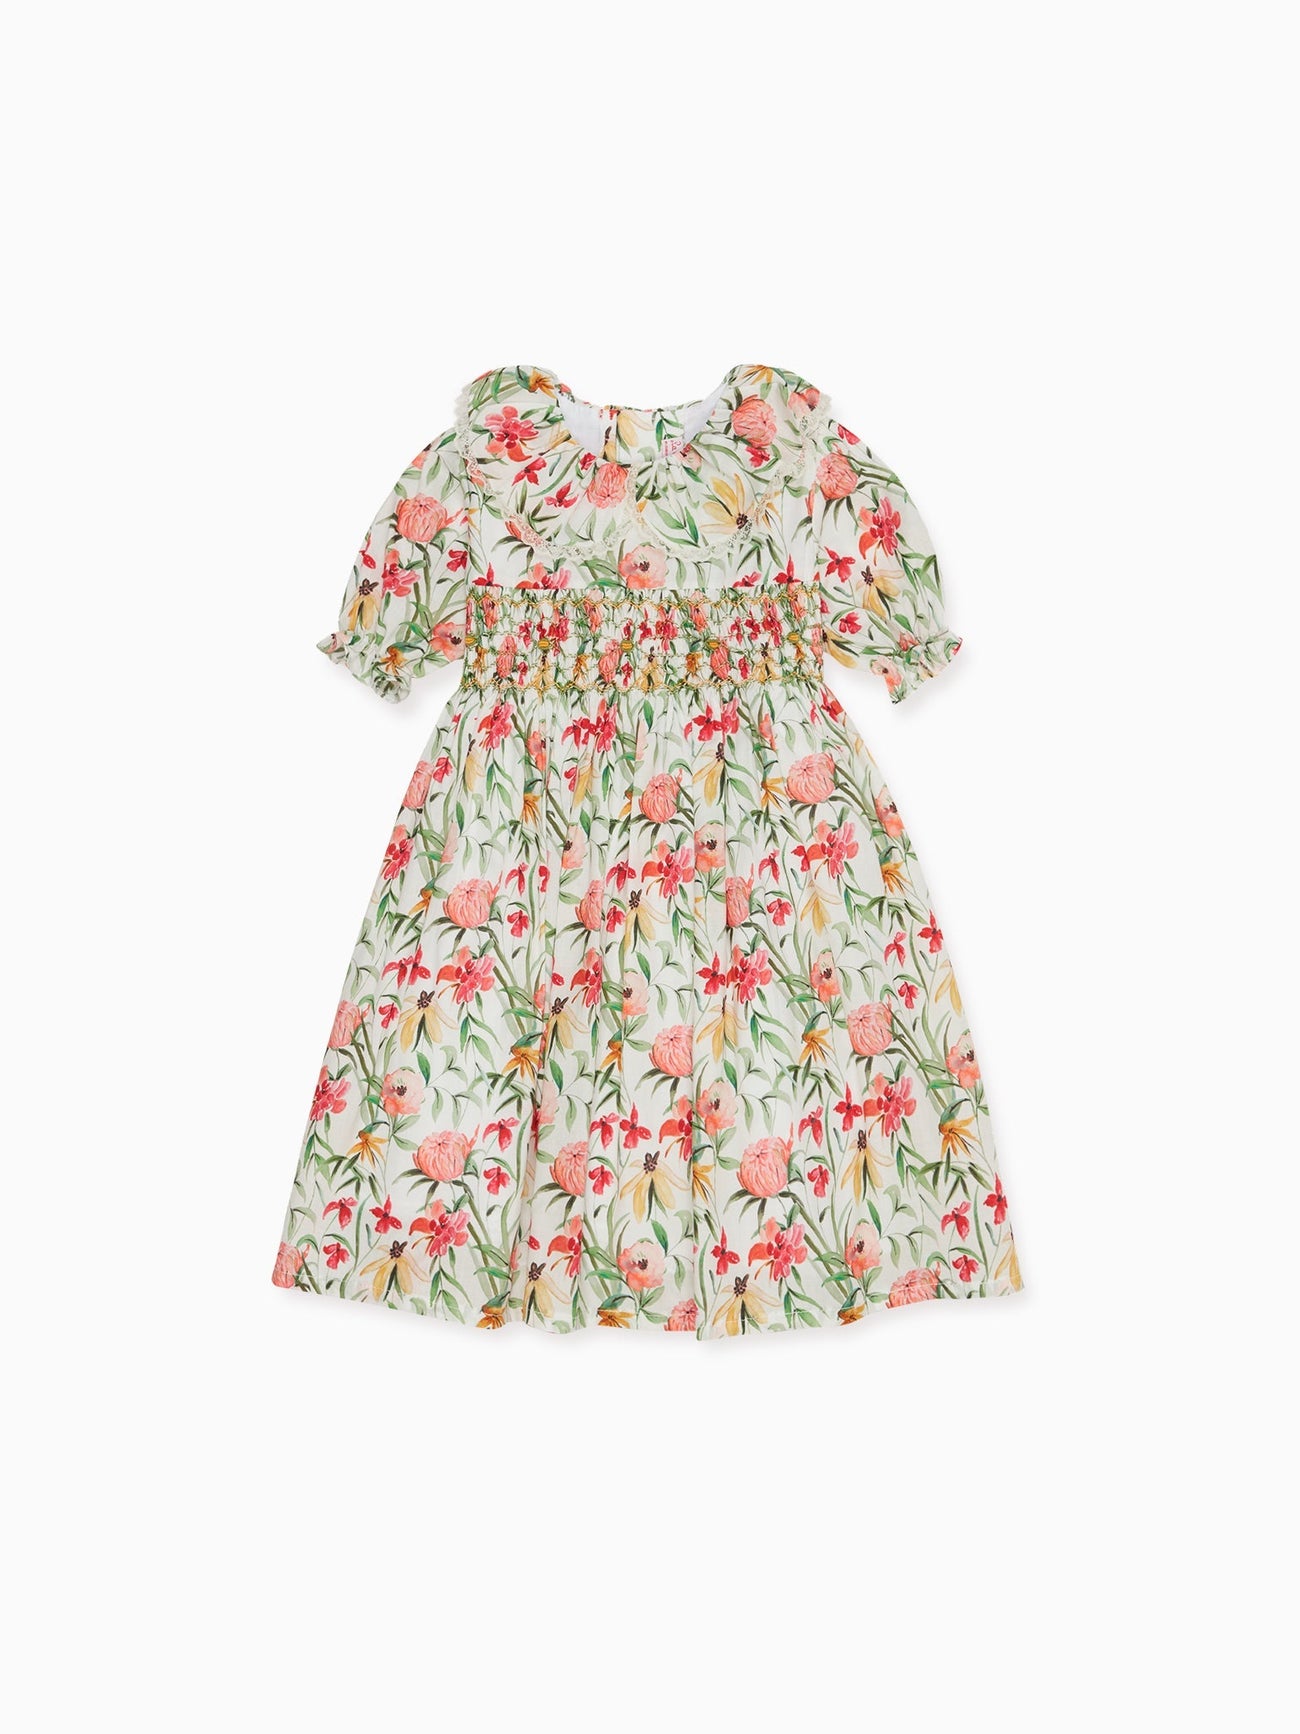 Coral Floral Milla Girl Hand-Smocked Dress